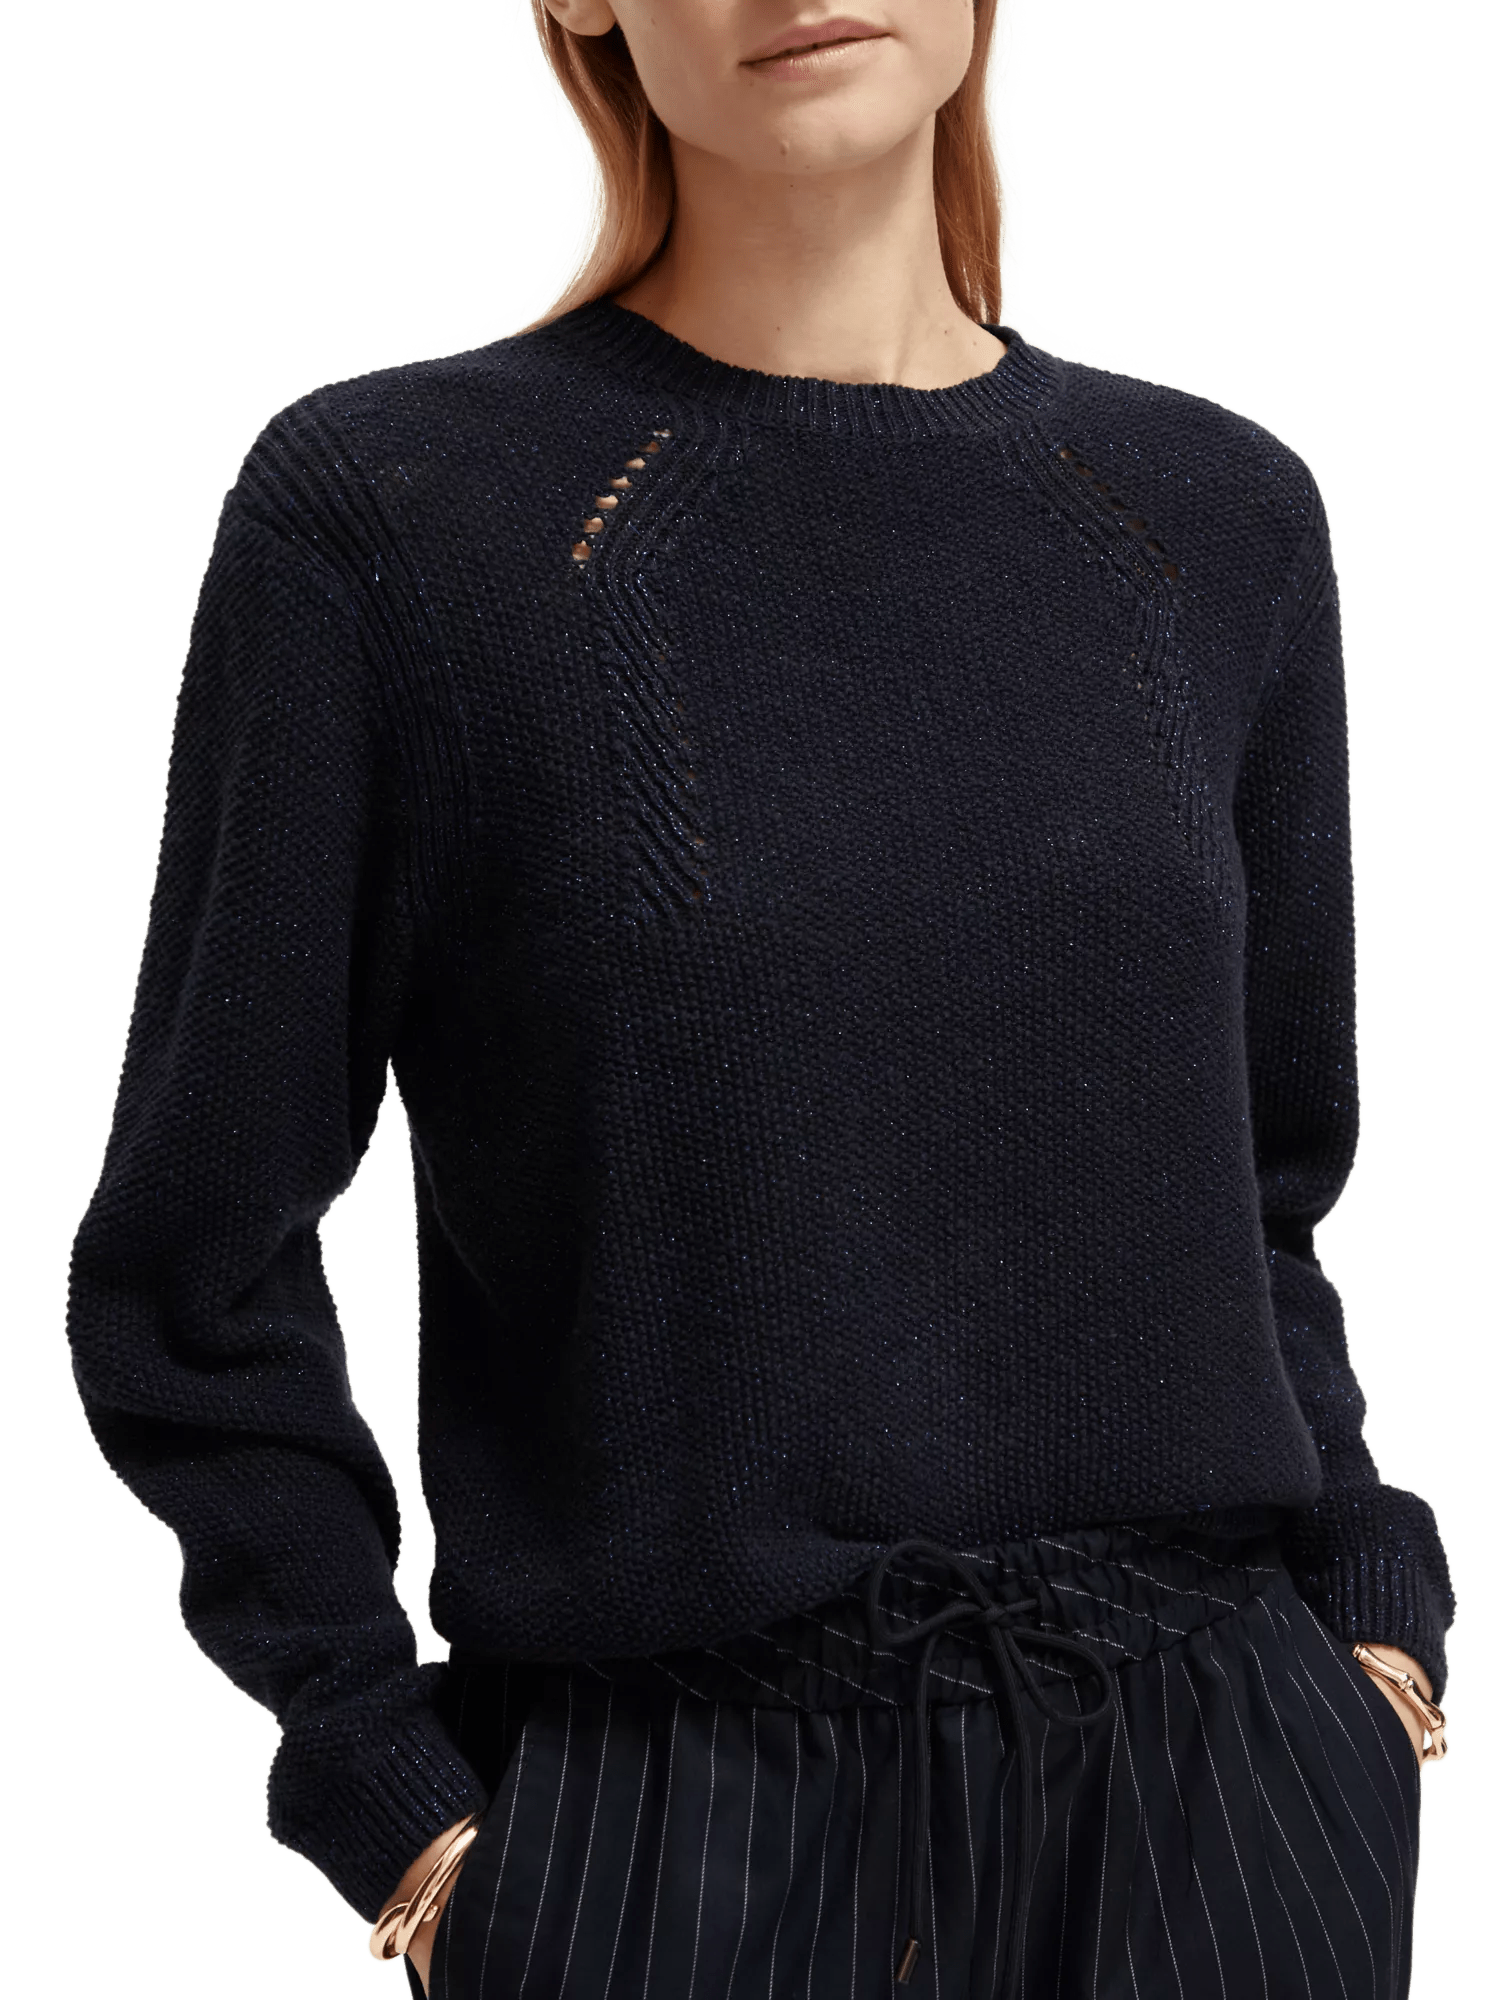 Scotch & Soda Knitted pointelle sweater MDL-DTL1